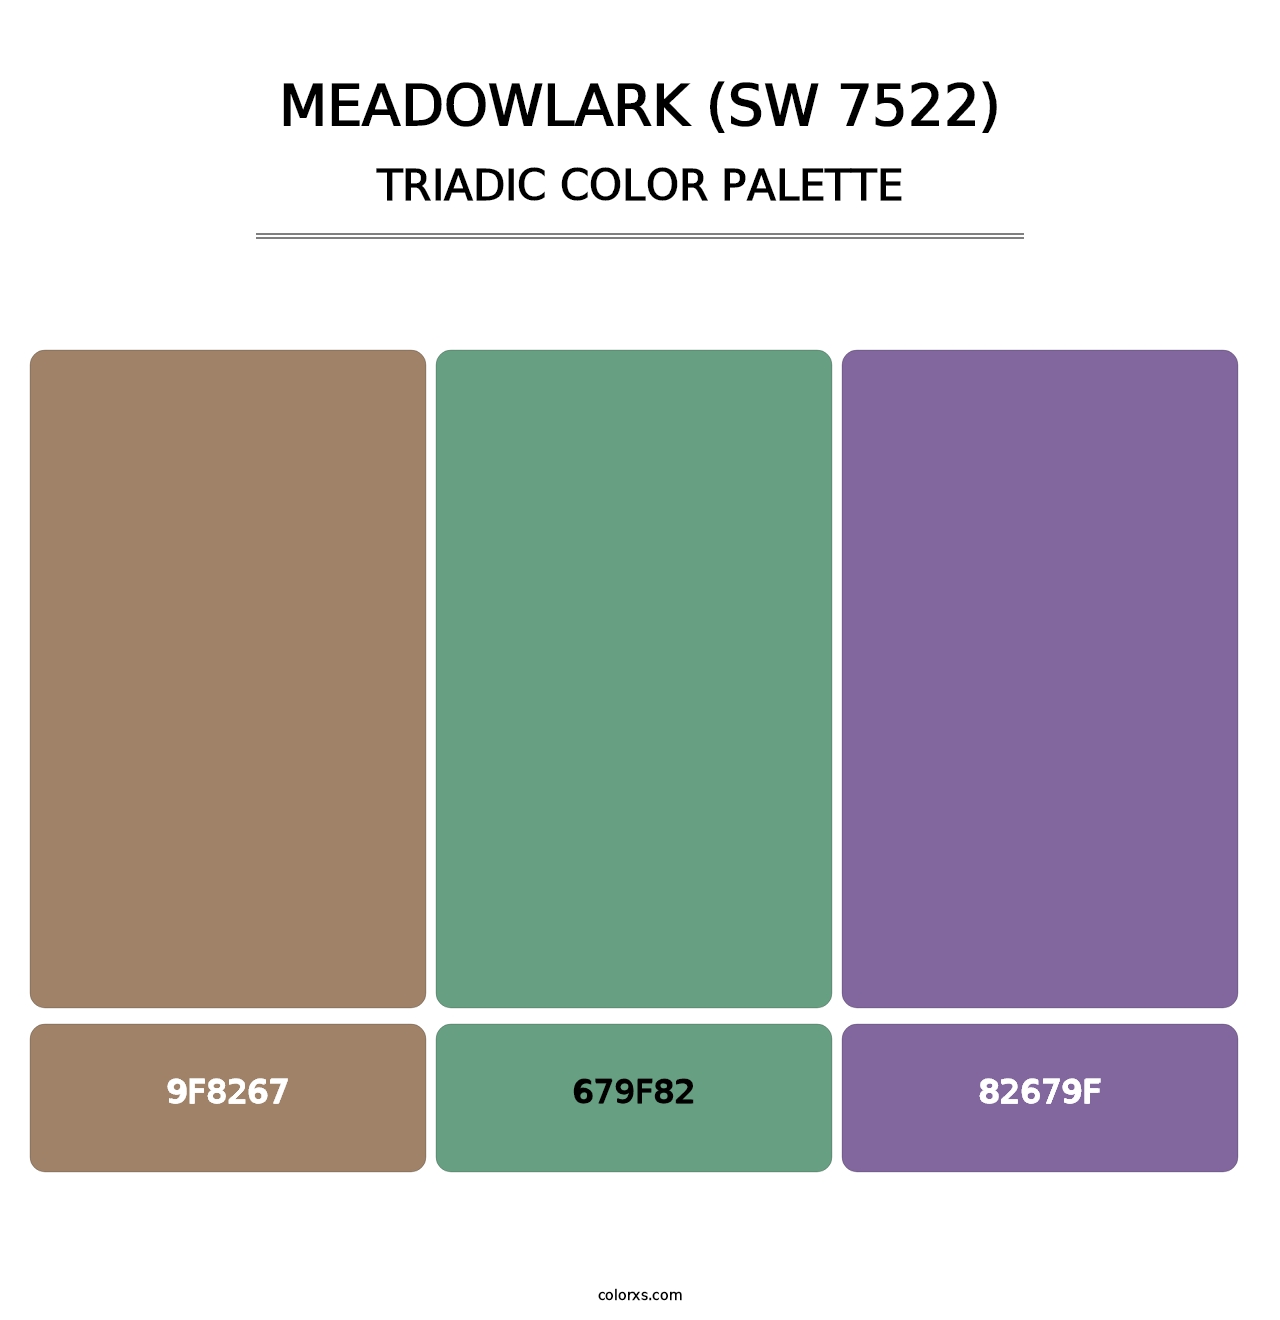 Meadowlark (SW 7522) - Triadic Color Palette